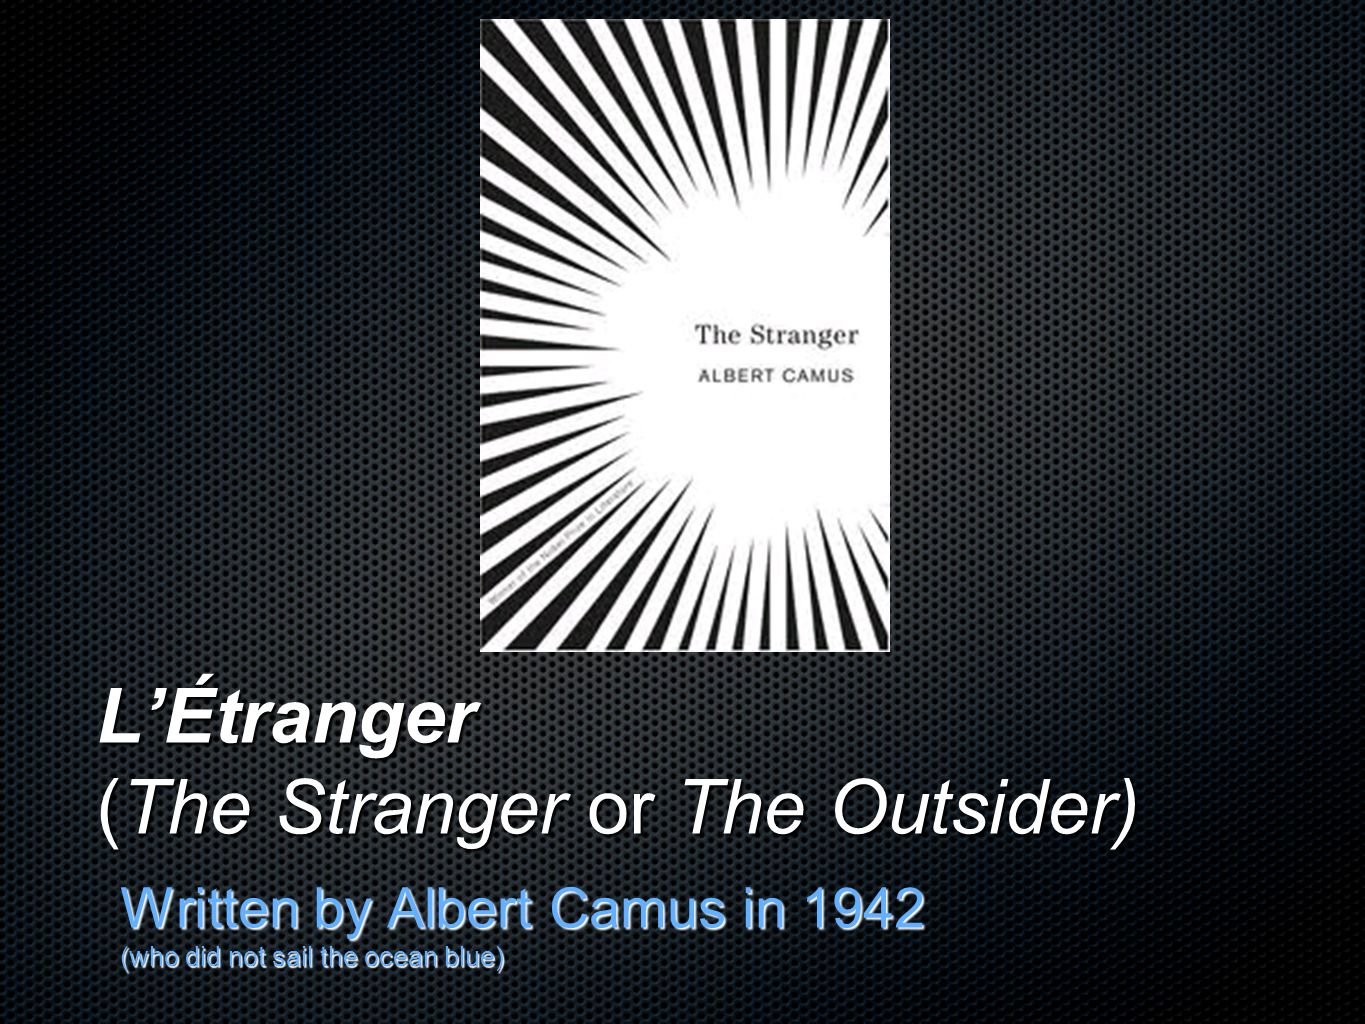 Reflective statement the stranger camus